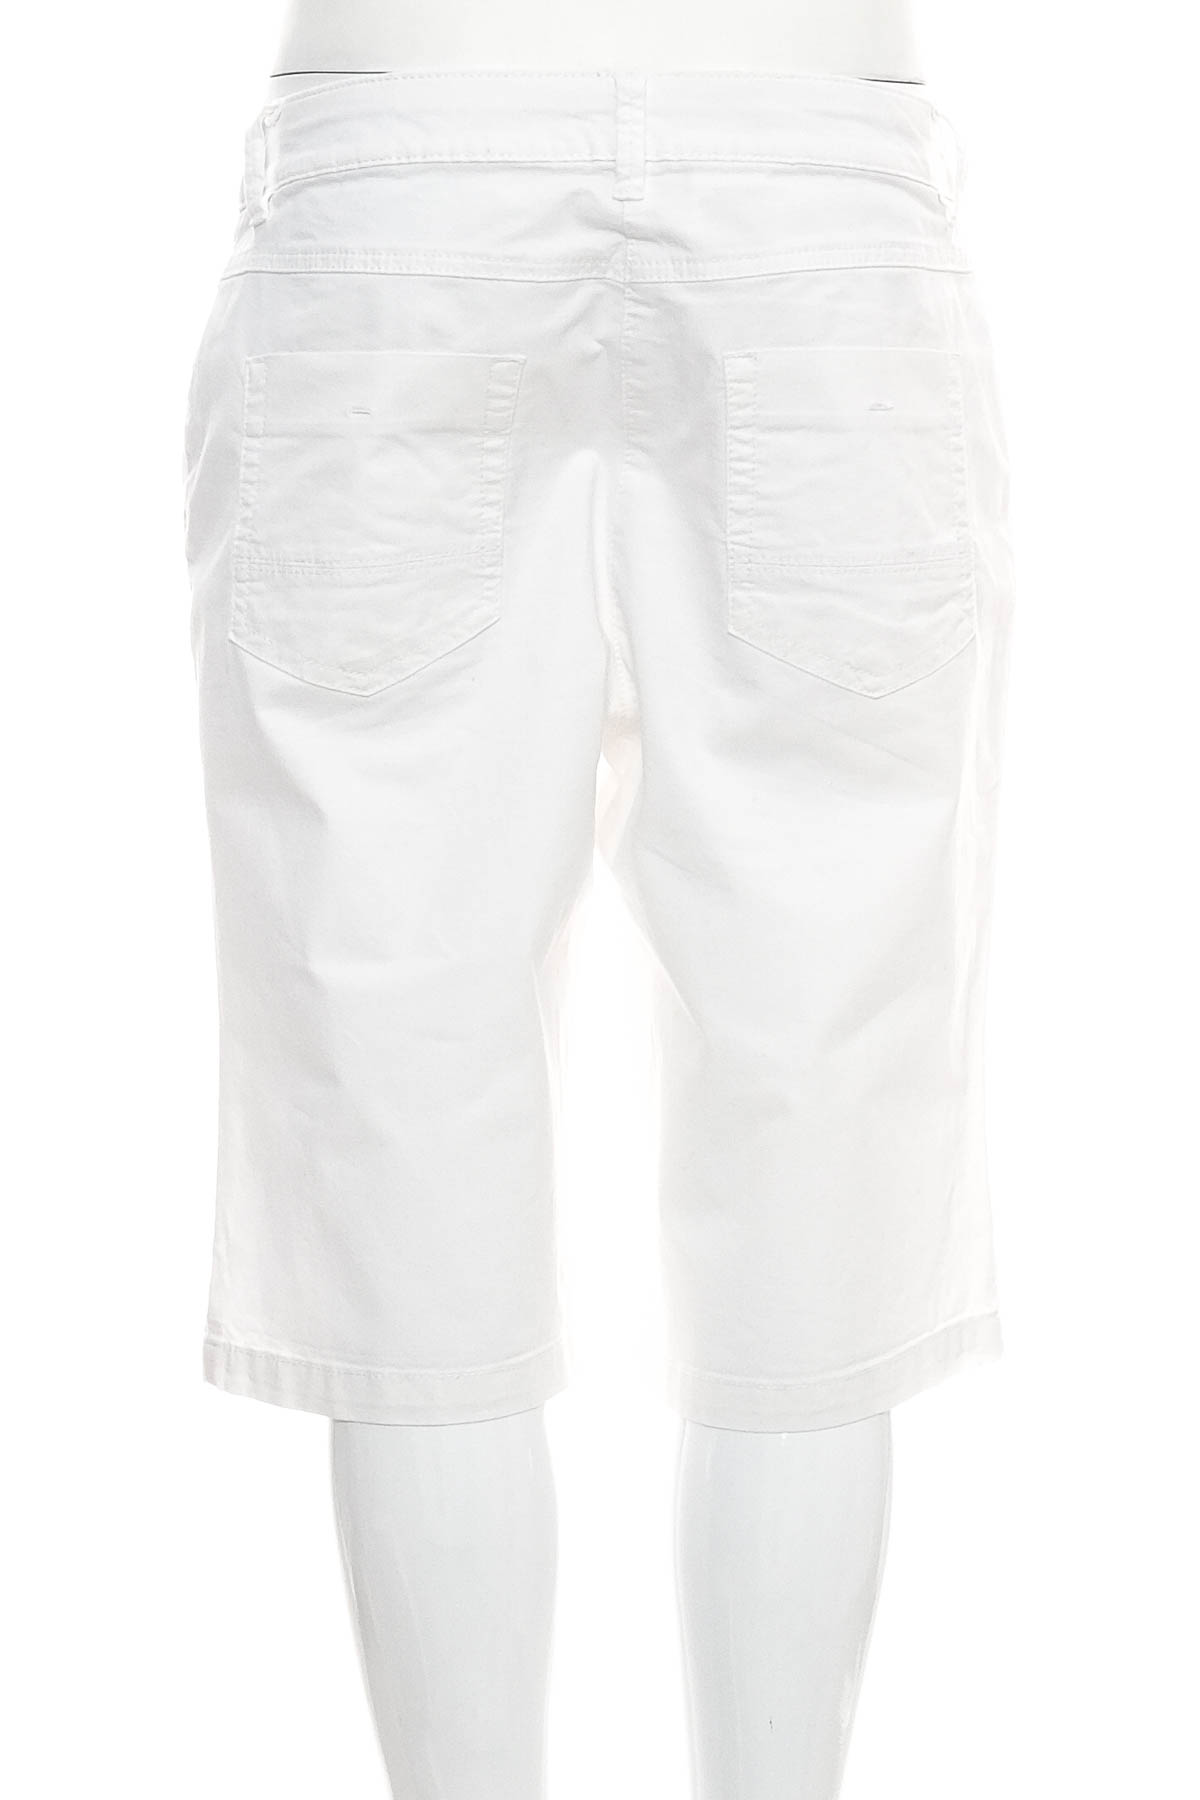 Female shorts - Garnaby's - 1